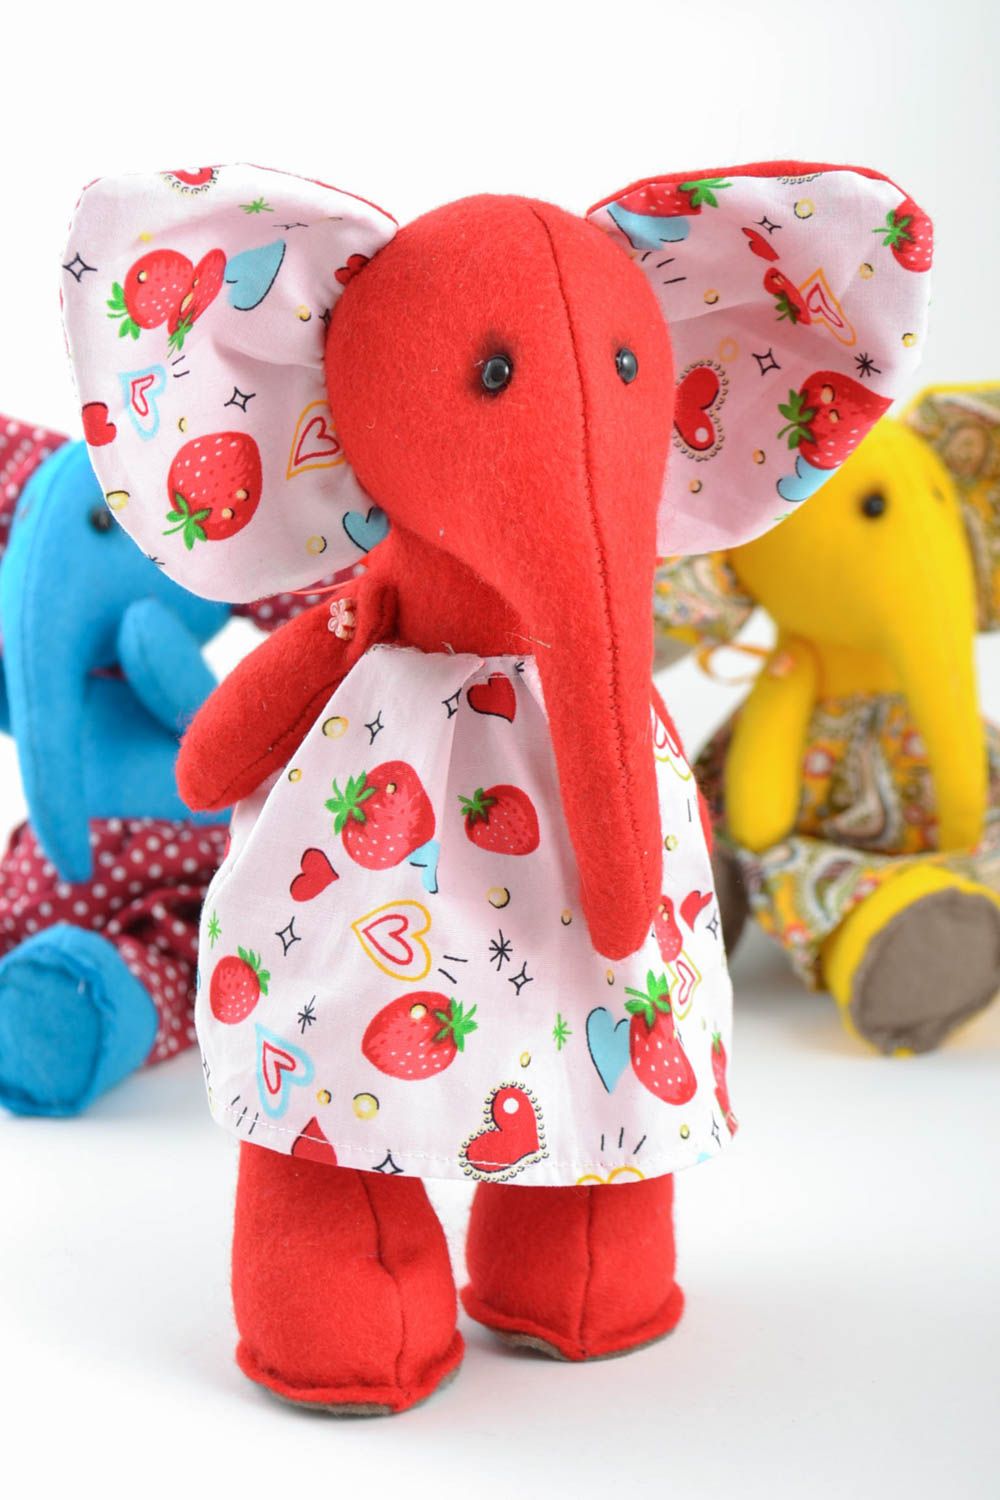 Children's nice handmade felt fabric soft toy elephant of red color photo 1